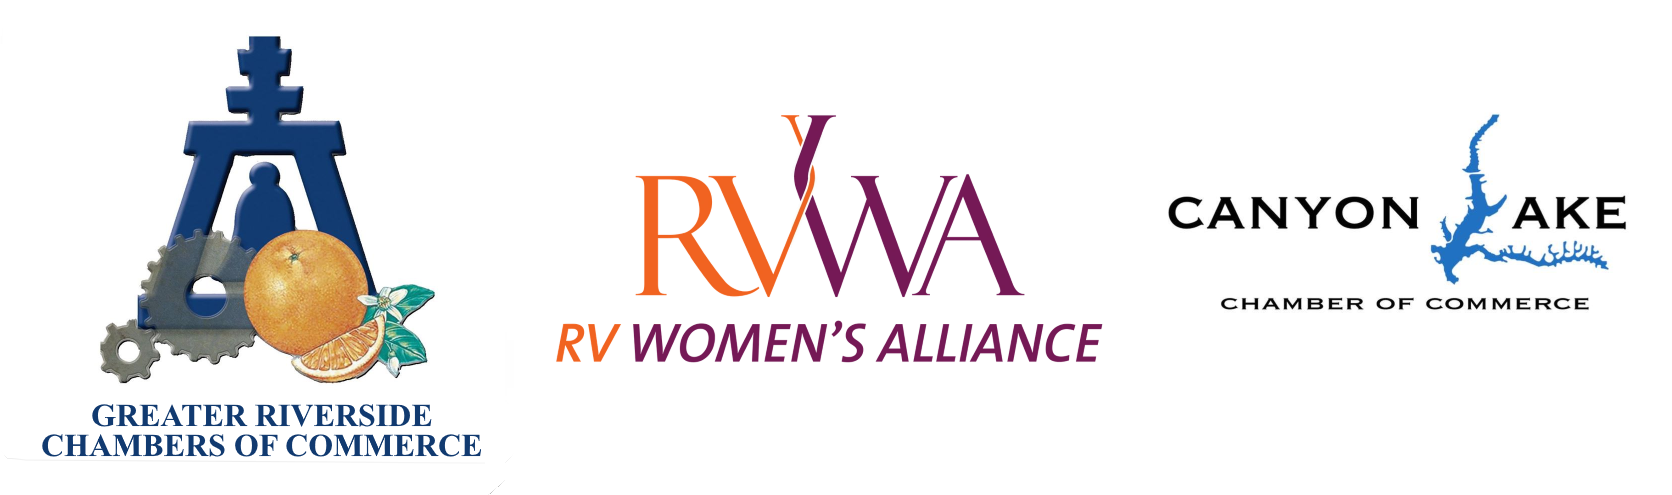 GRCOC and RVWA Membership Image